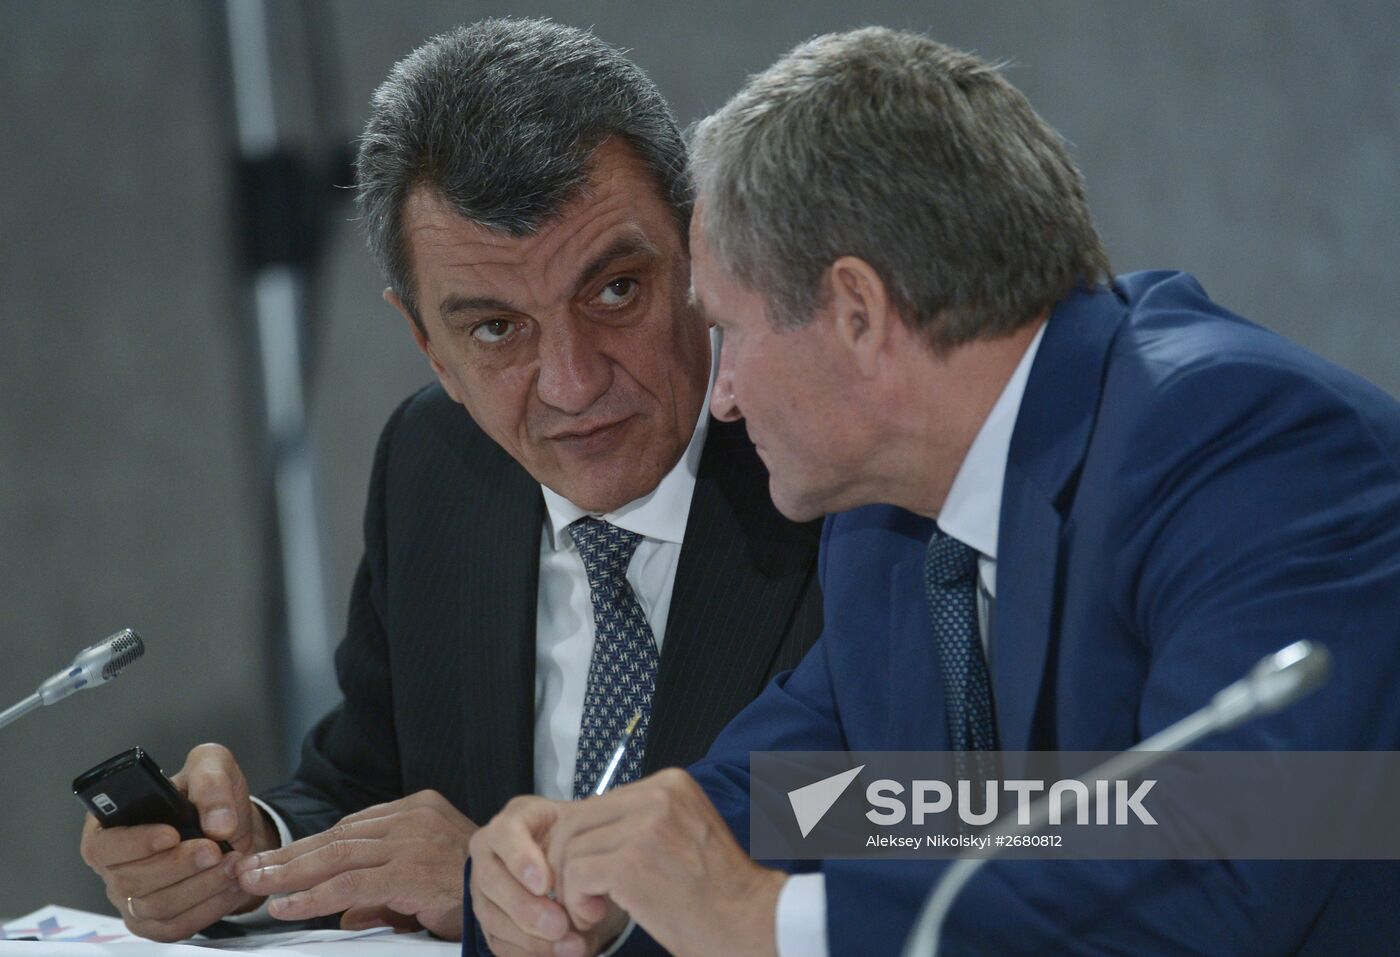 Meeting of Russian State Council's Presidium in Crimea